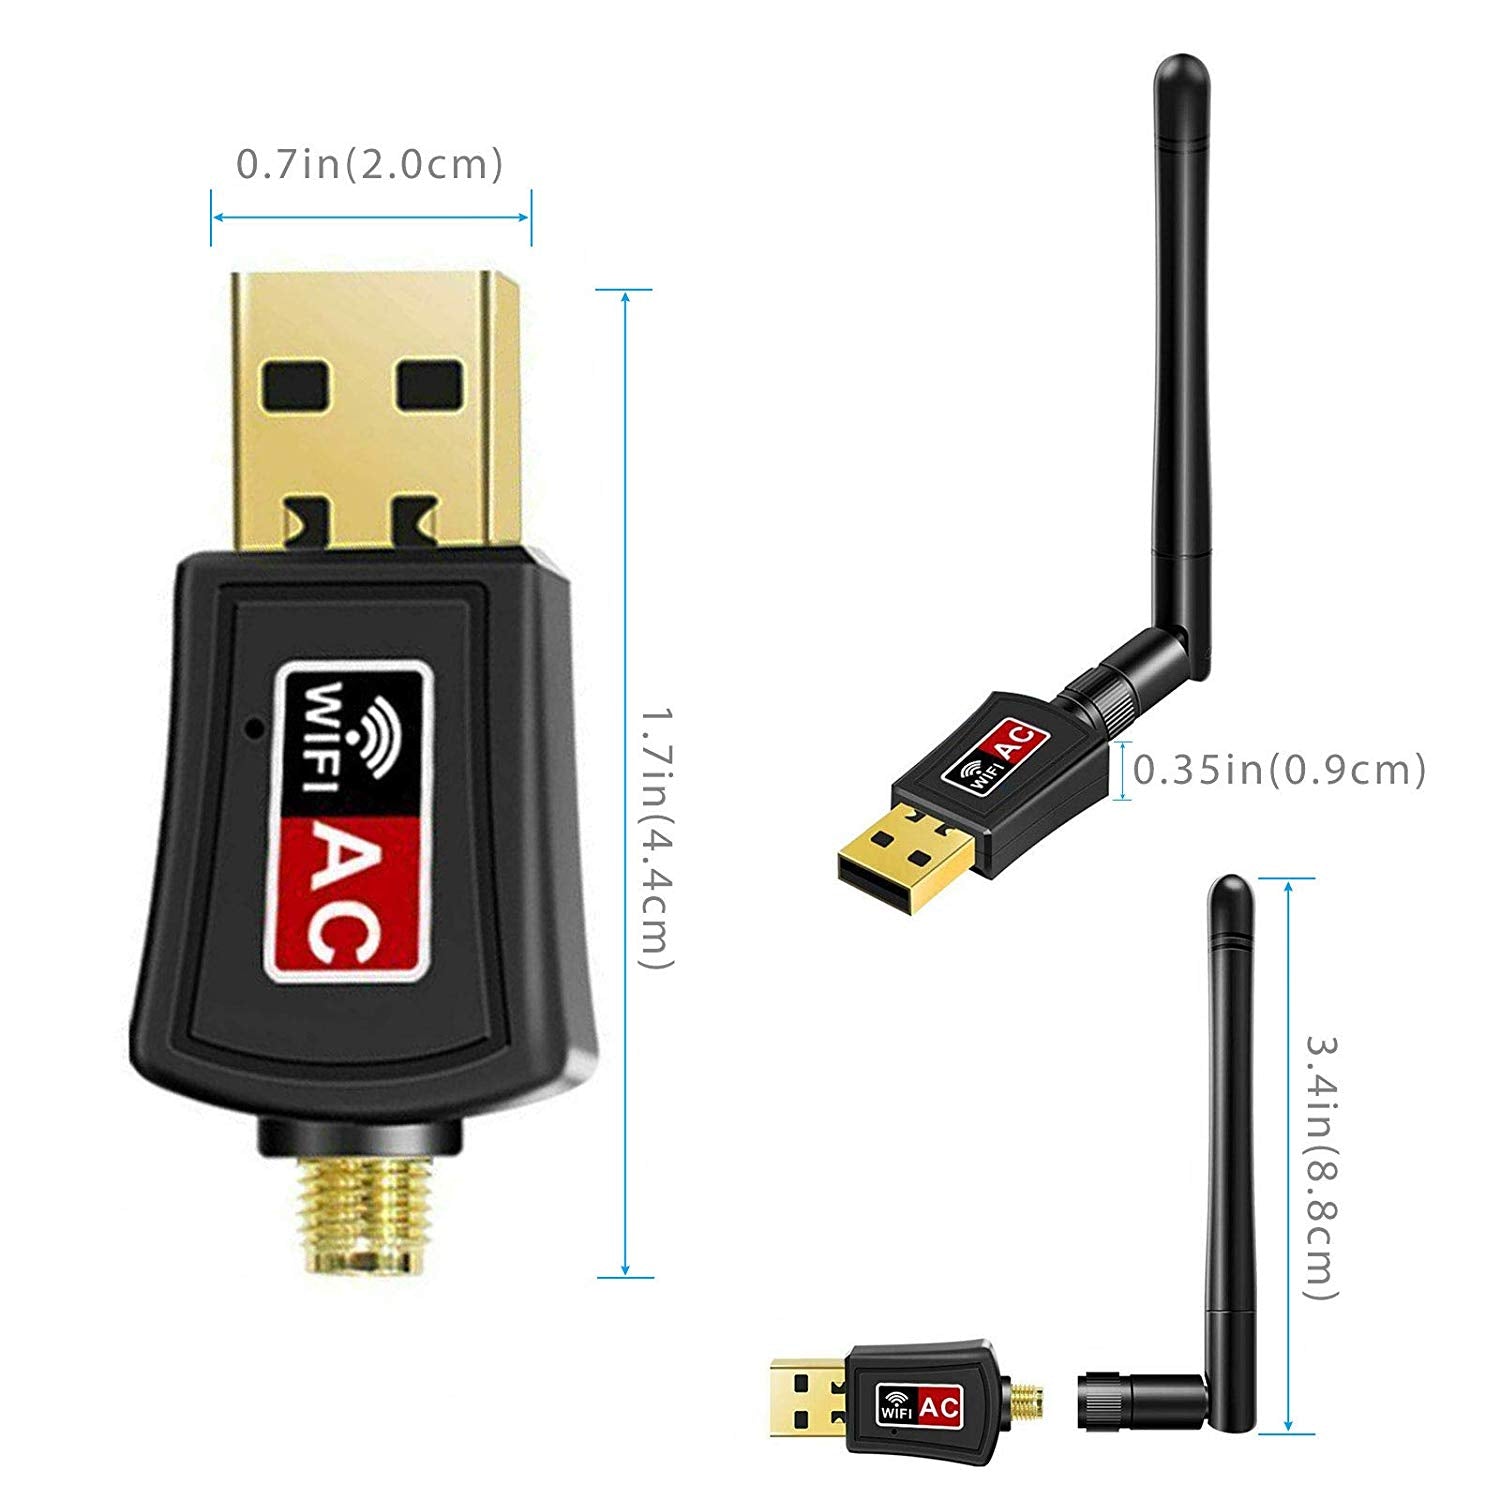  USB WiFi Adapter, 600Mbps Wireless WiFi Network